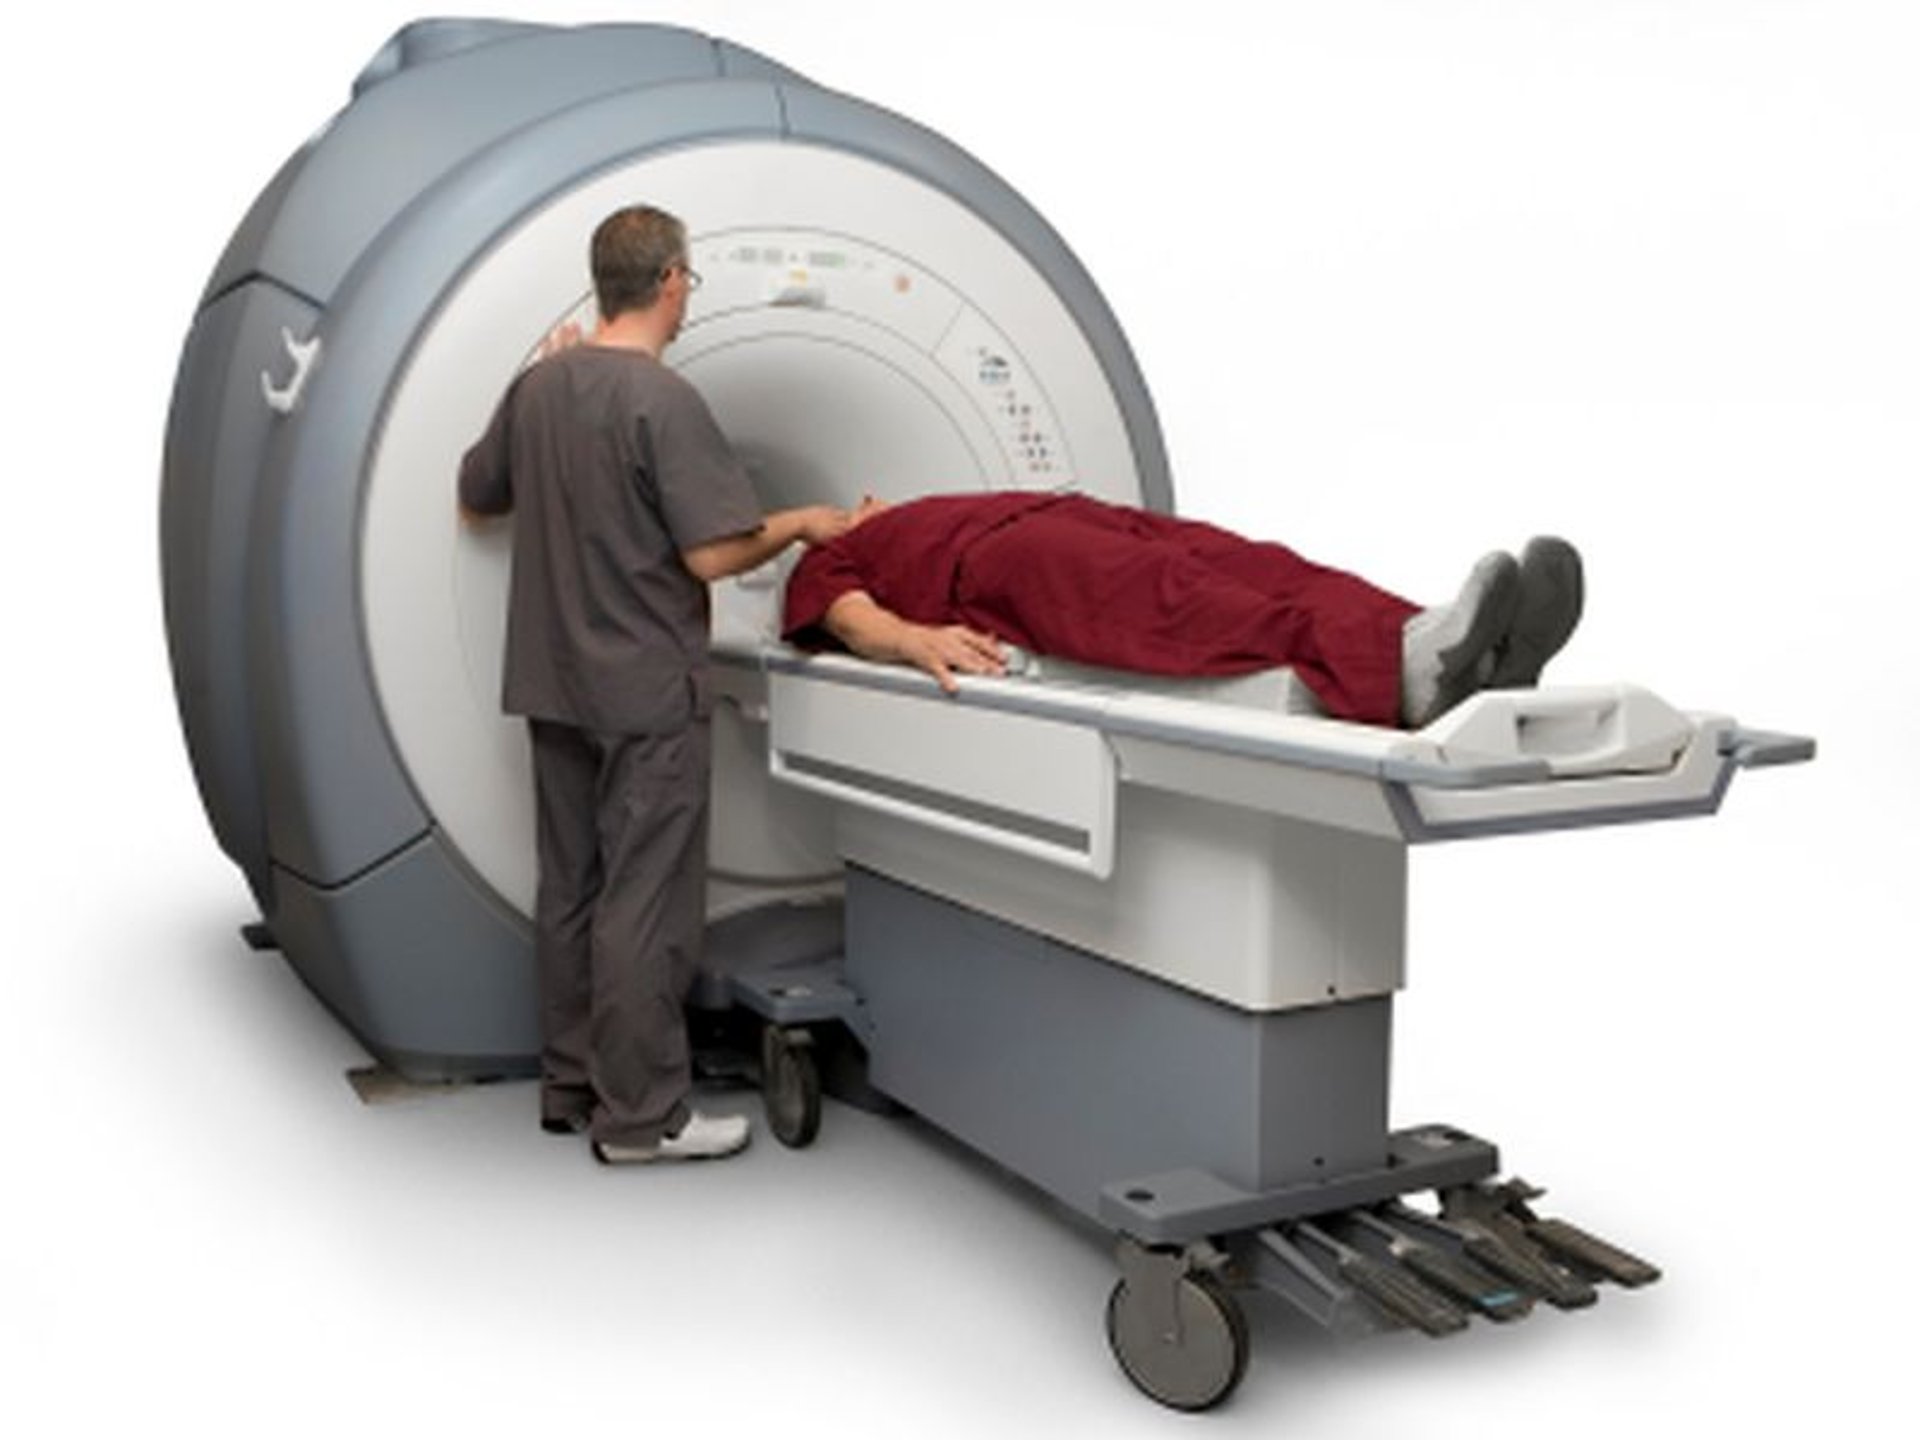 Any Mask Containing Metal Could Cause Burns During an MRI, FDA Warns thumbnail